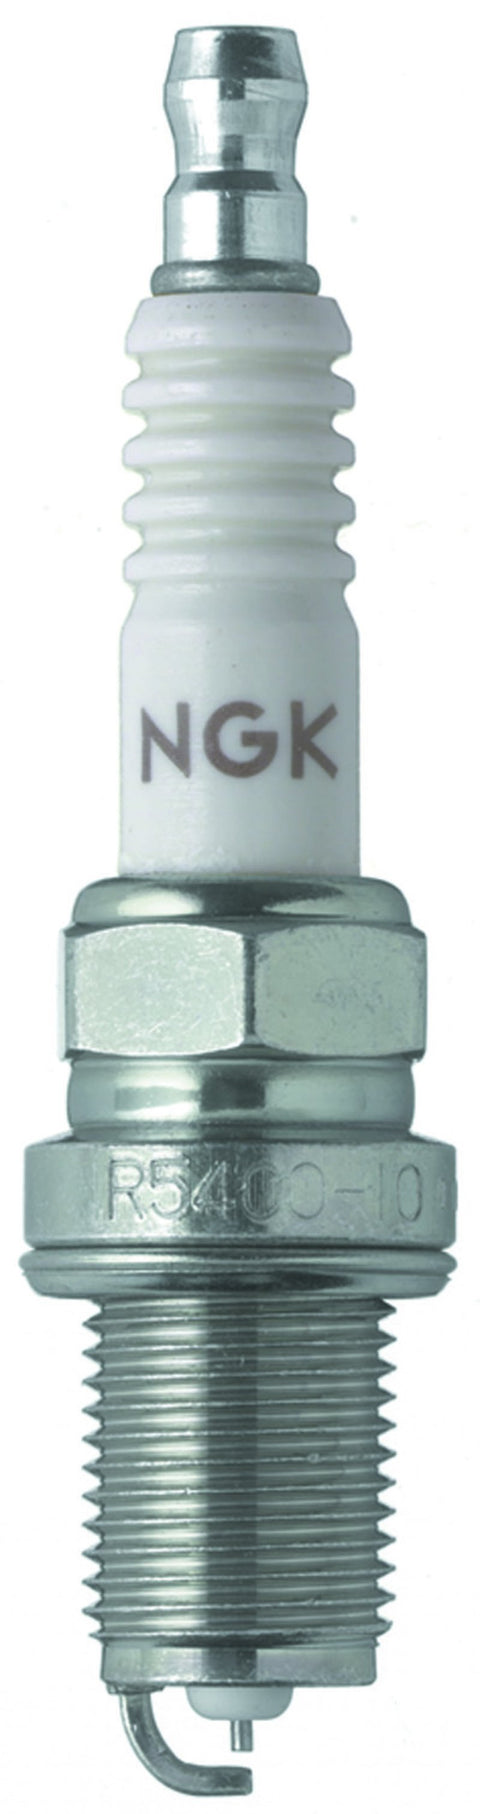 NGK Iridium Racing Spark Plug Box of 4 (4897)